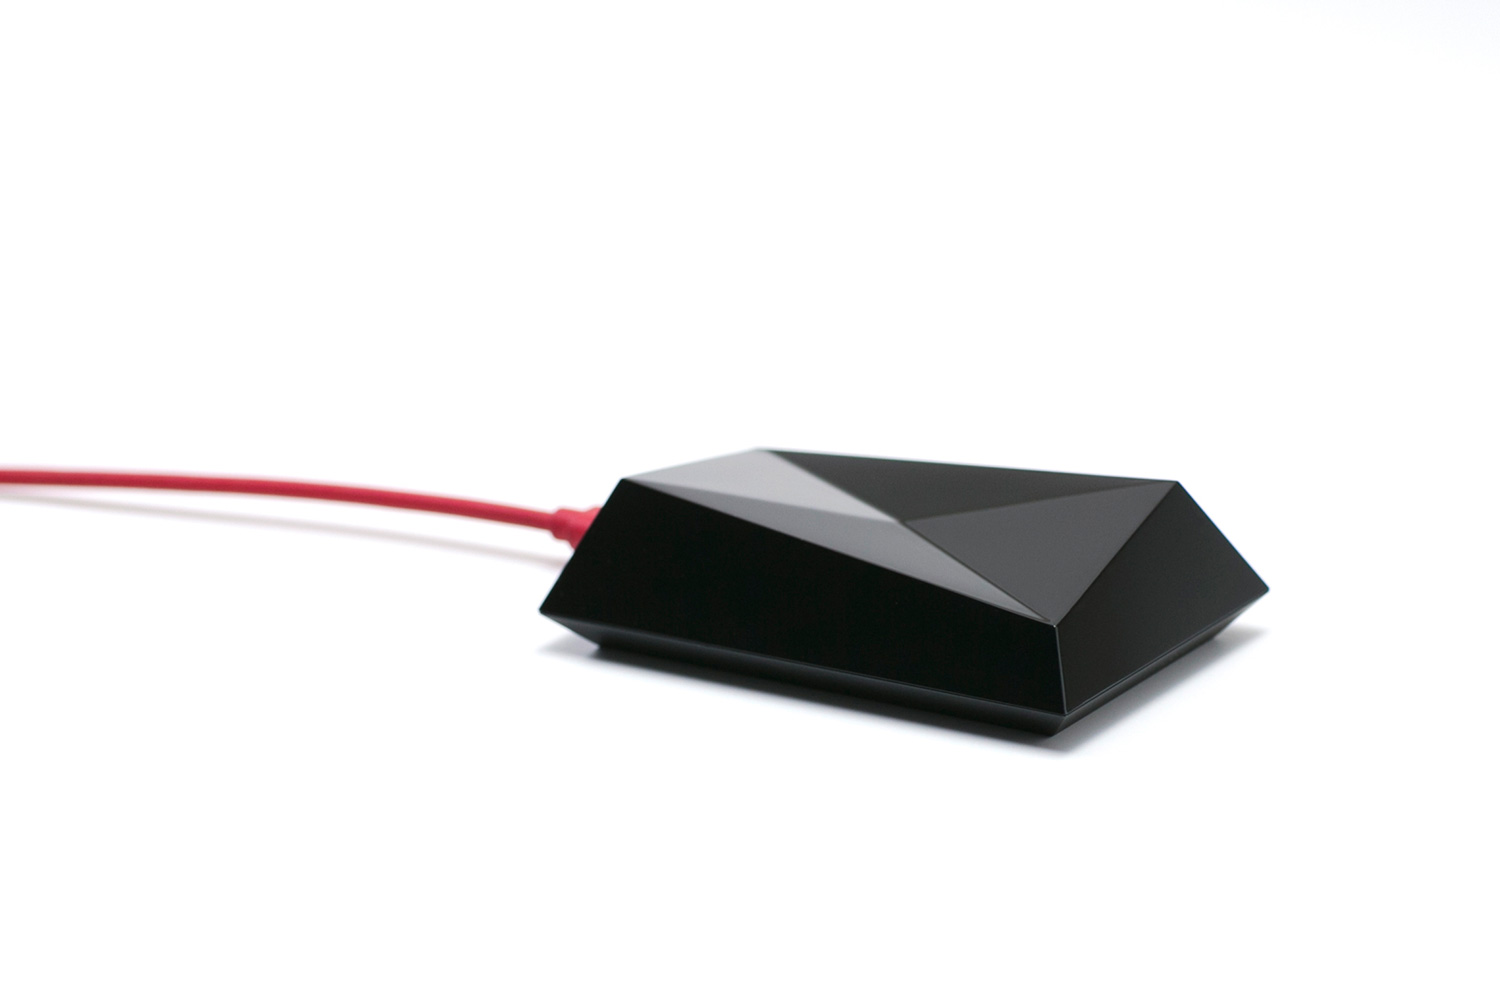 blipcast kickstarter use wired headphones wirelessly product device wireless sound 7